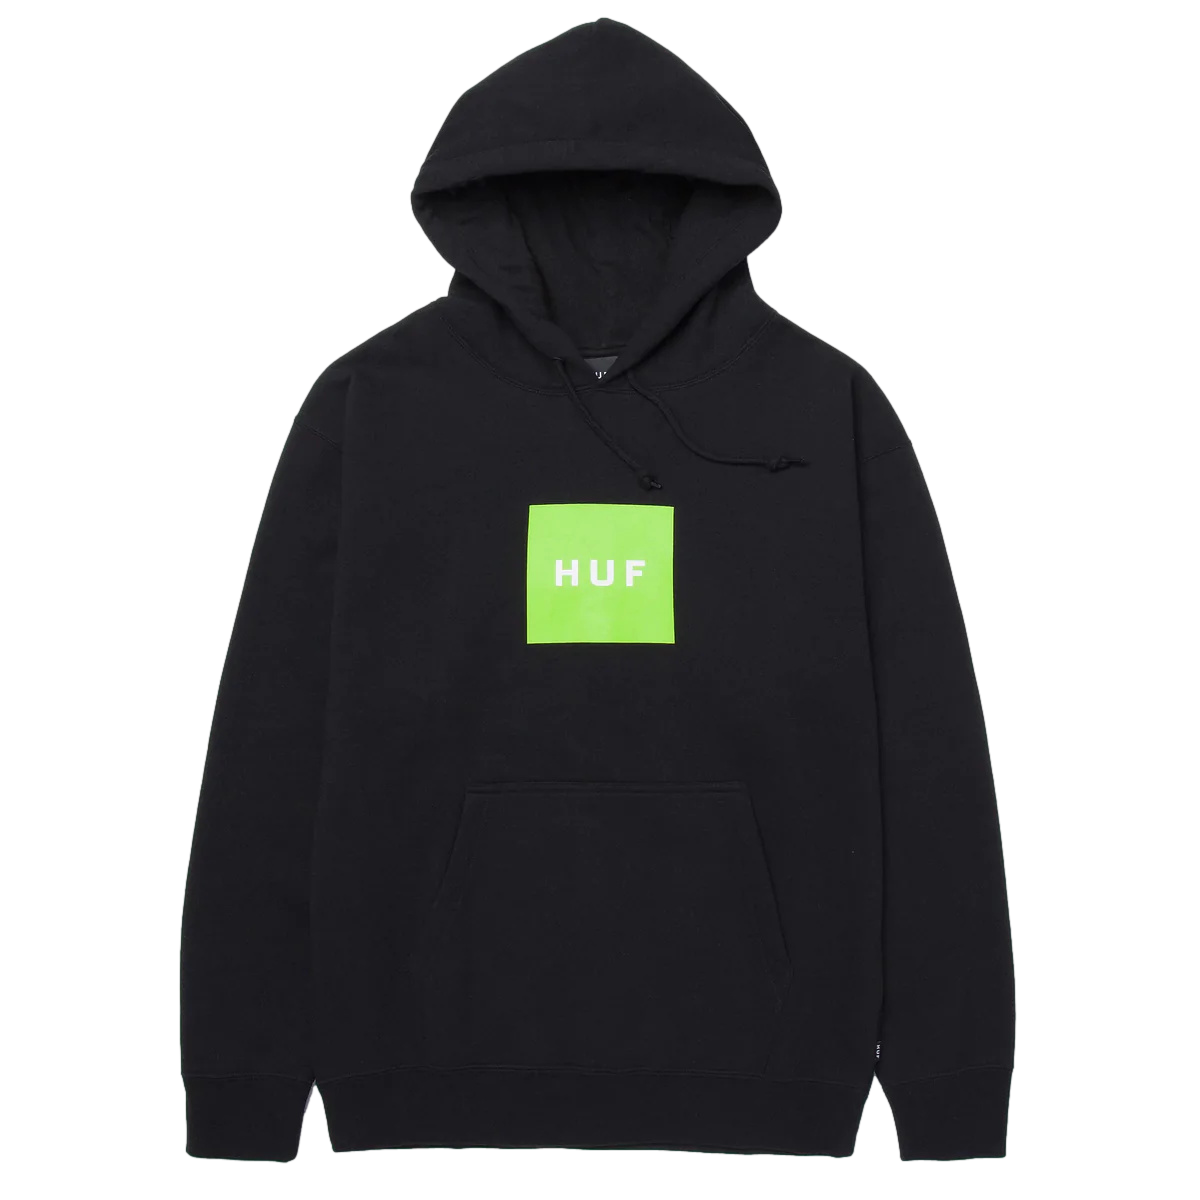 Huf Essentials Box Logo Pullover Hoodie